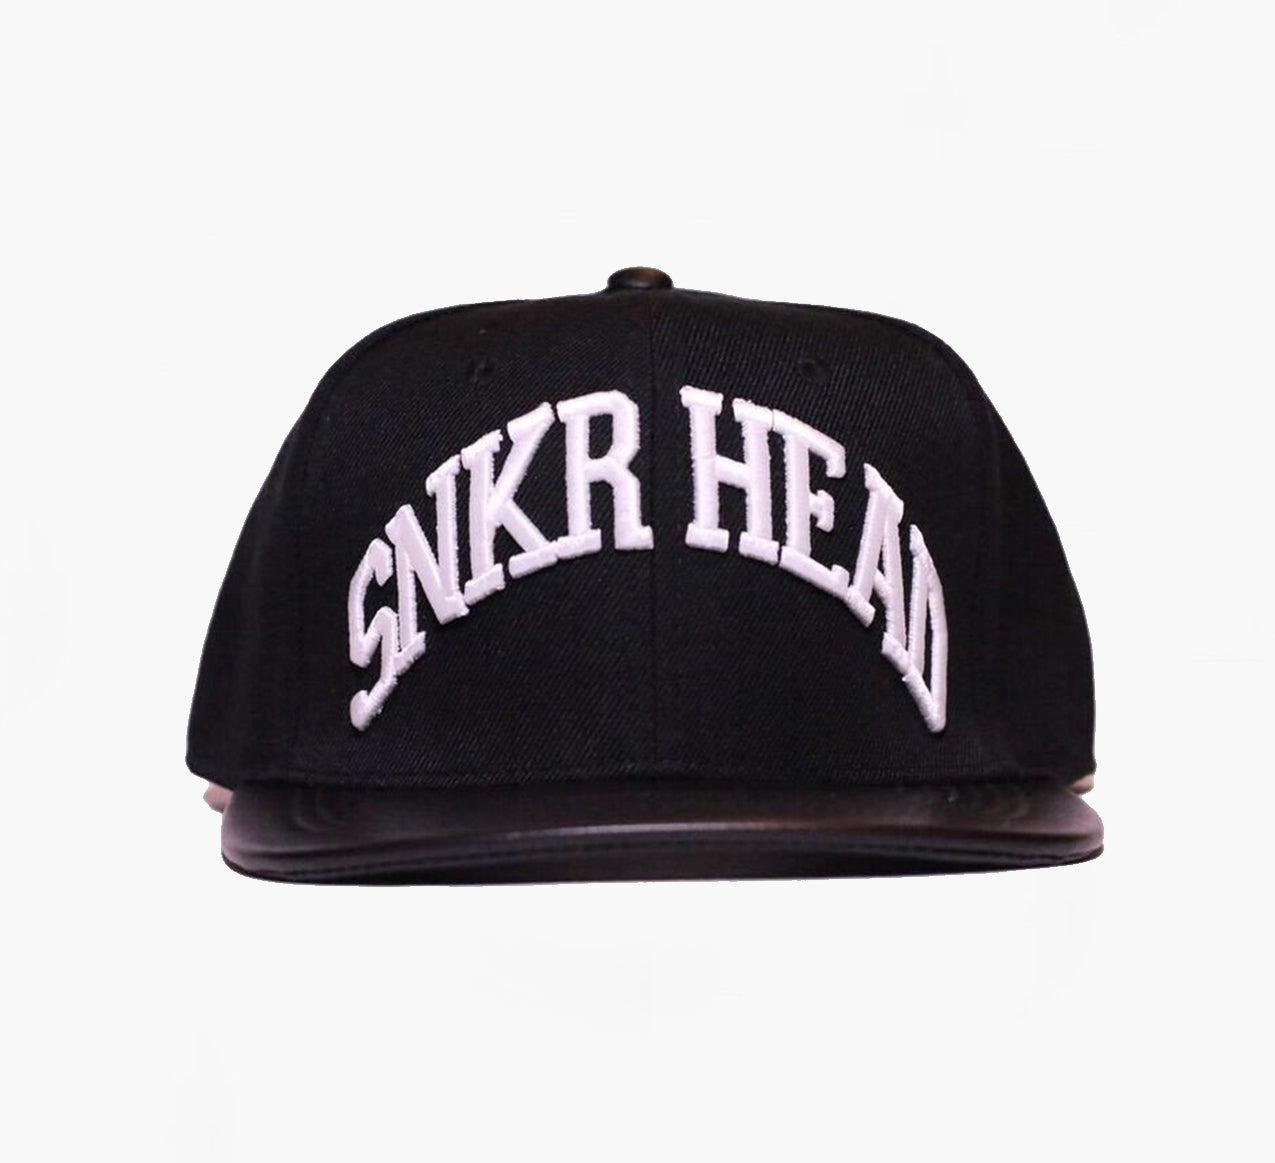 SNKR HEAD Leather Brim Strapback Hat